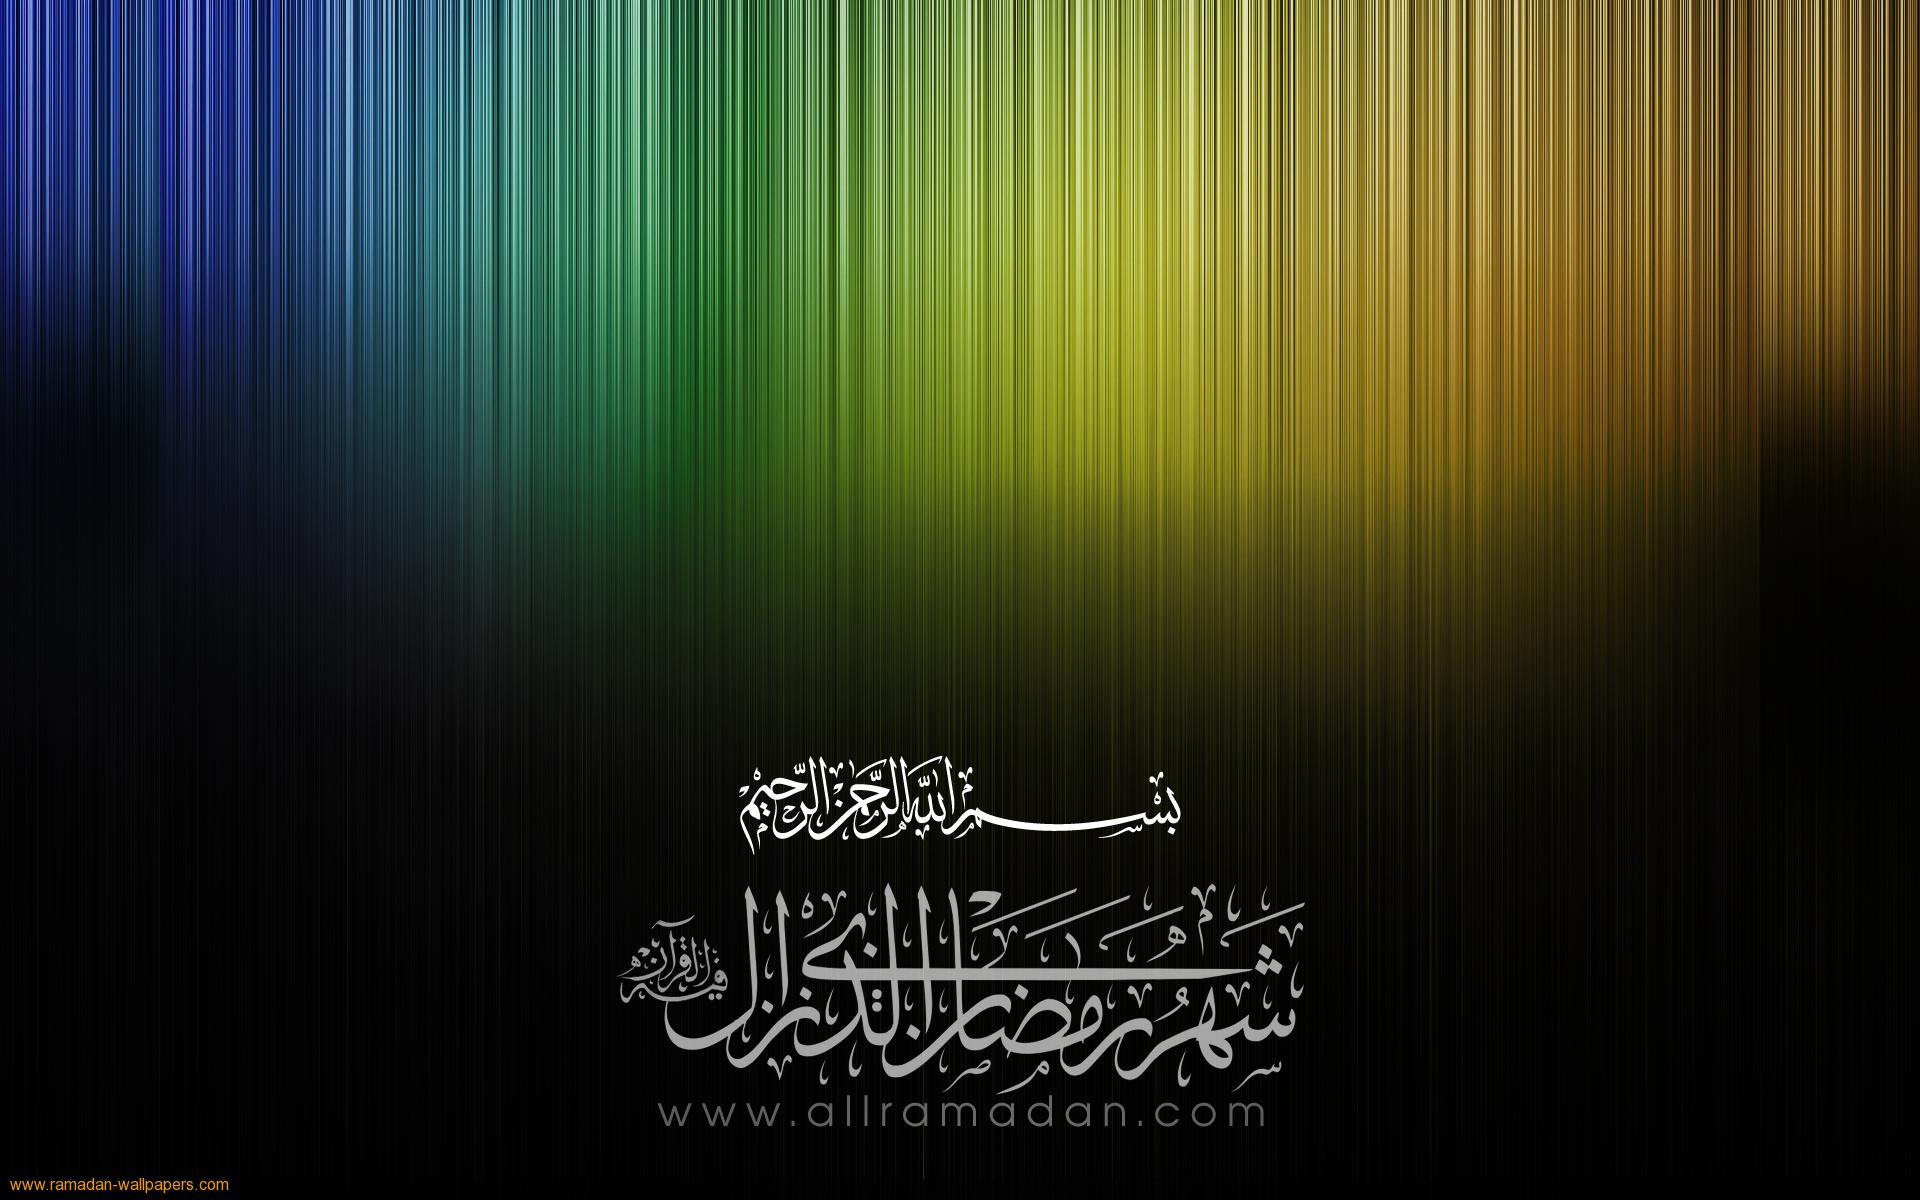 Quran Wallpaper Widescreen Landscape Image Wmwallpaper